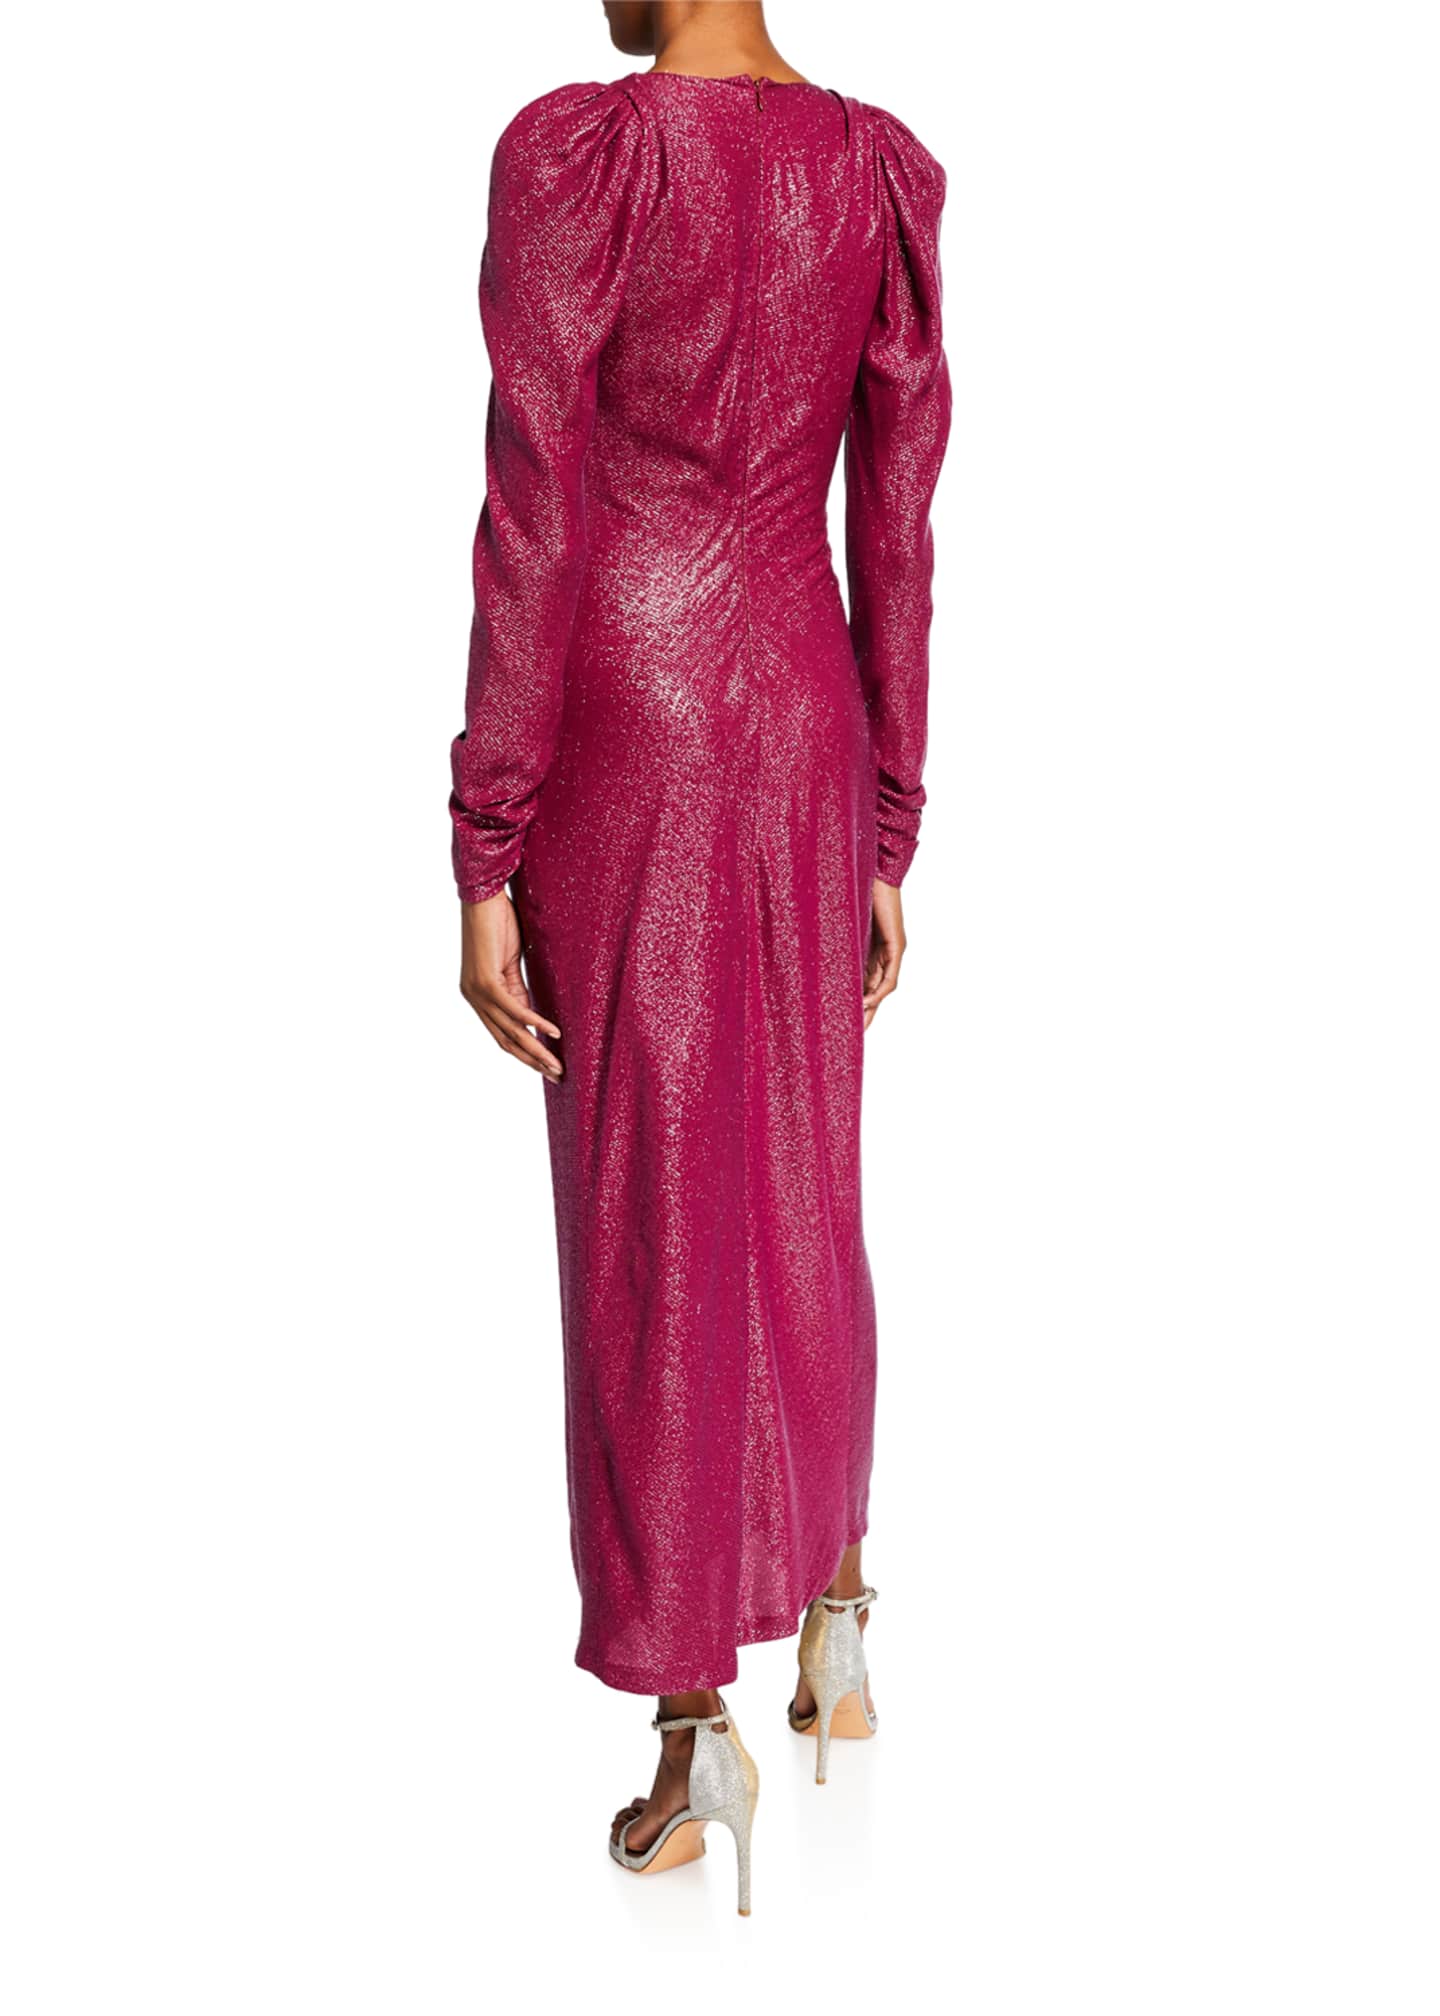 Monique Lhuillier Sparkled-Knit Knotted-Front Dress - Bergdorf Goodman